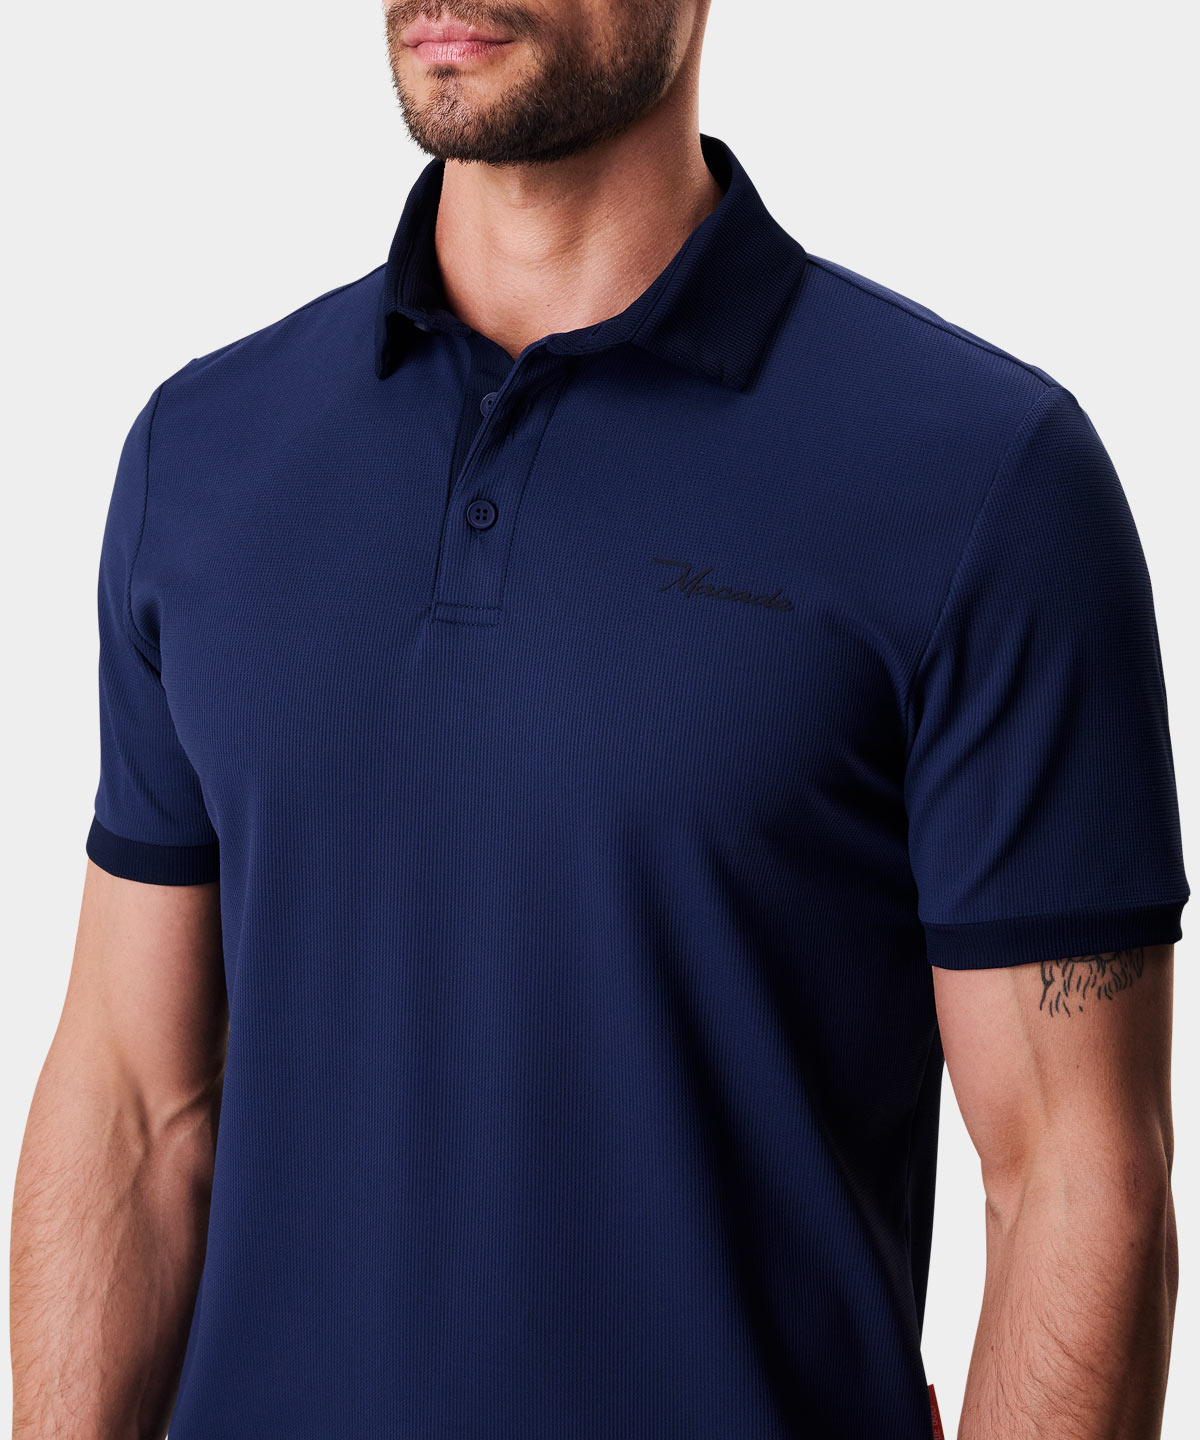 Jeston Dark Blue Polo Shirt